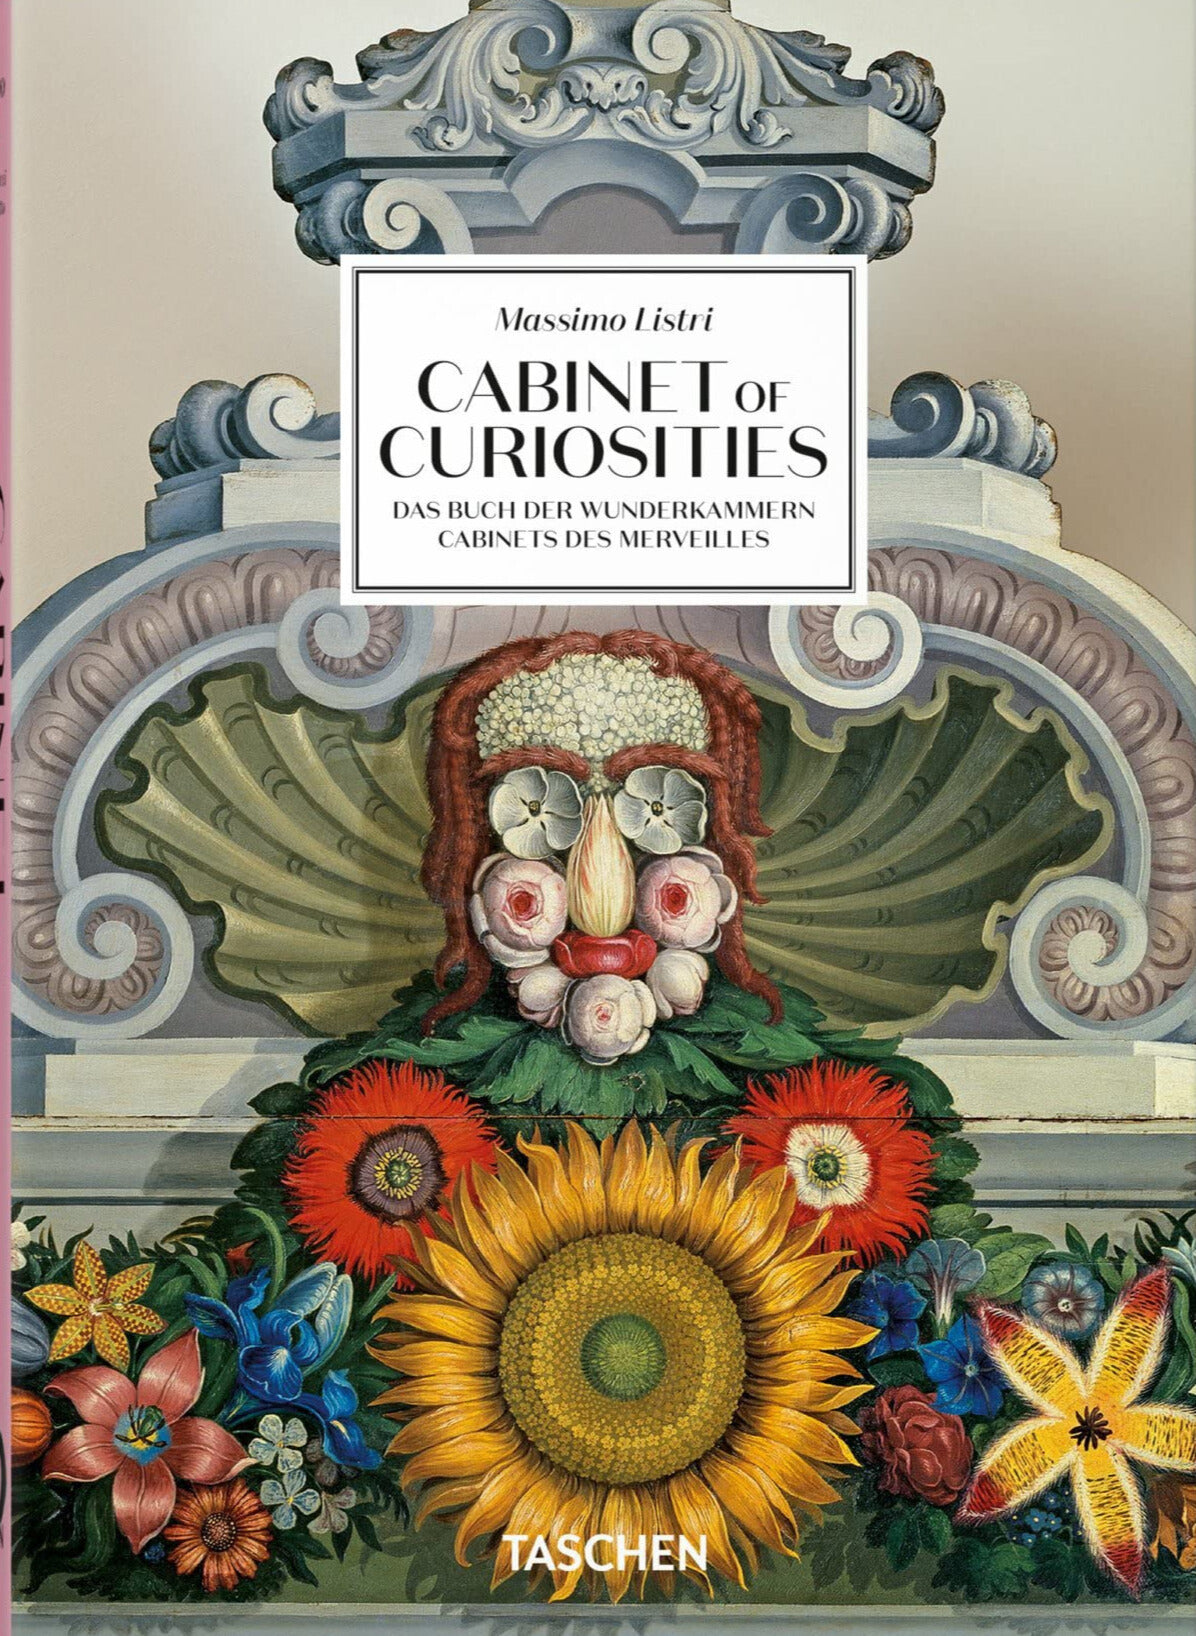 Massimo Listri. Cabinet of Curiosities. 40 series